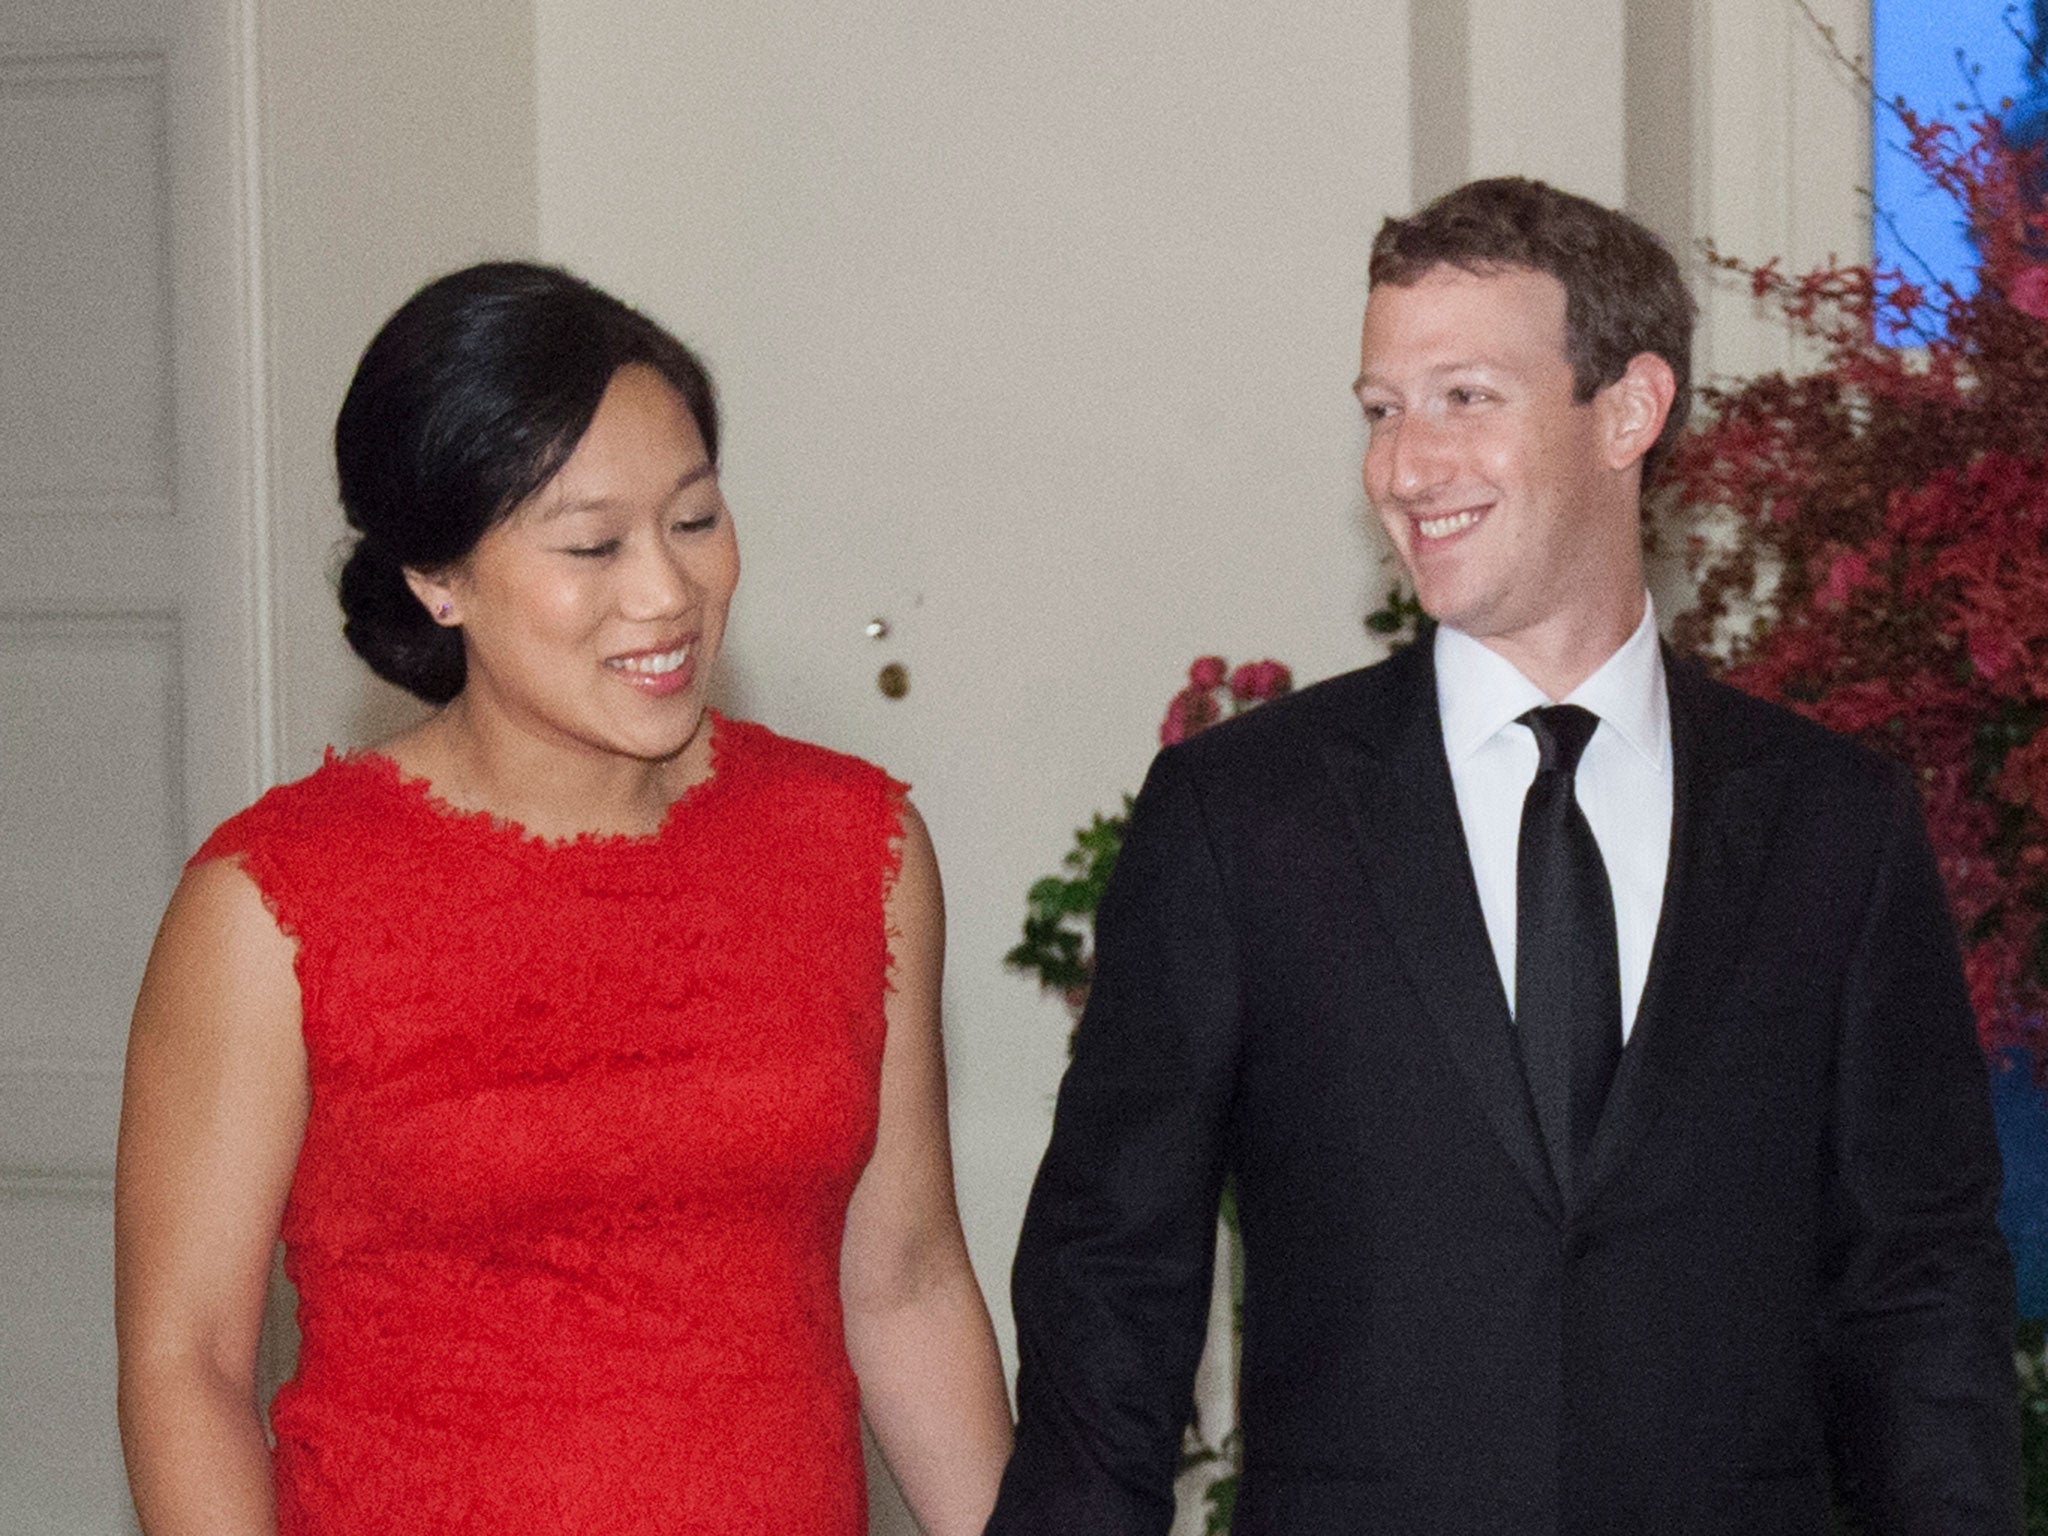 Mark Zuckerberg and Priscilla Chan donated $1.5 billion to the Silicon Valley Community Foundation in 2012 and 2013